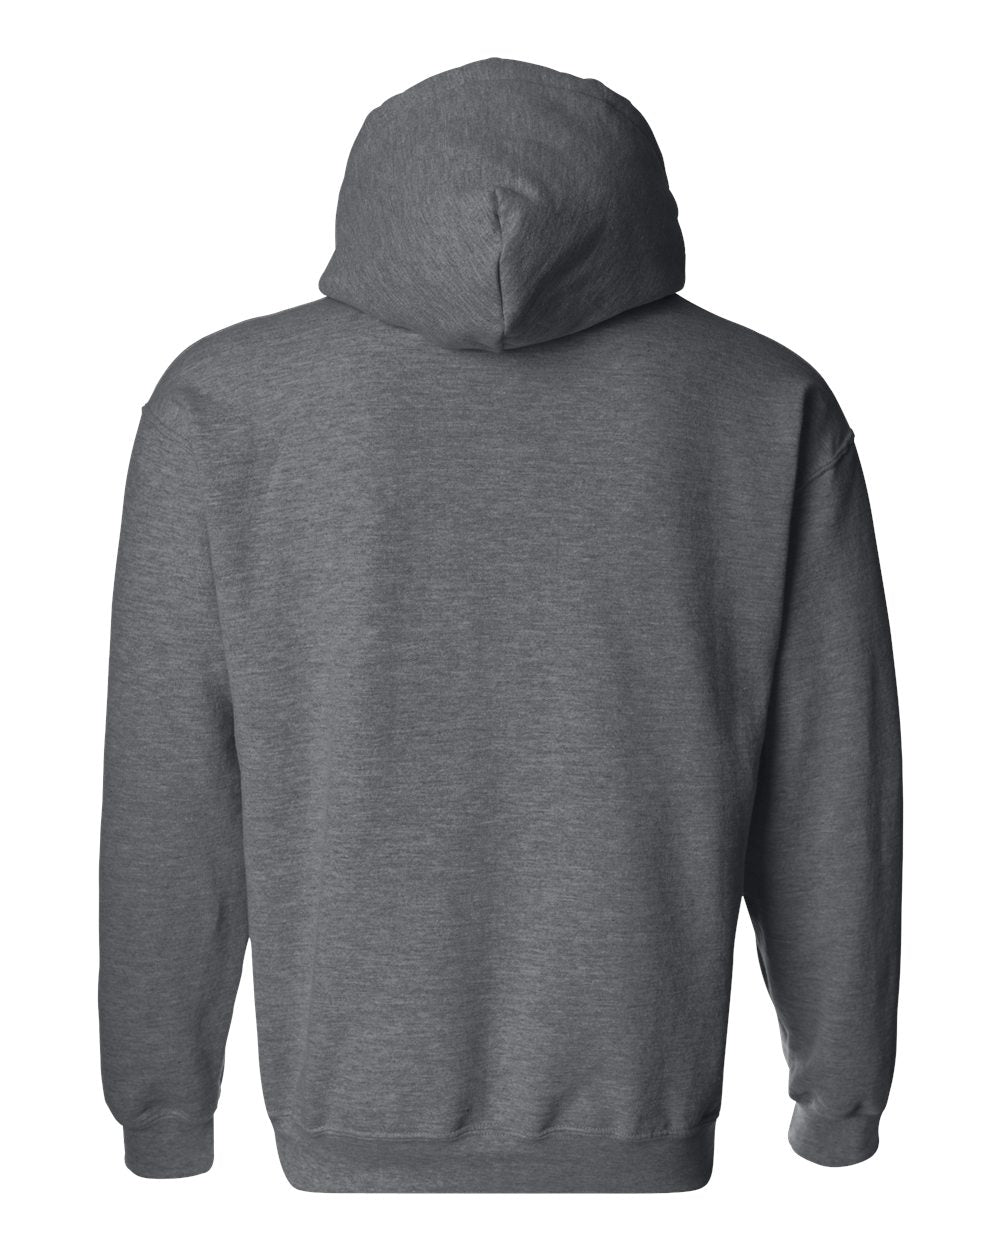 Gildan Dark Heather Heavy Blend Hooded Sweatshirt 18500 SKU#GDHHBHSS18500